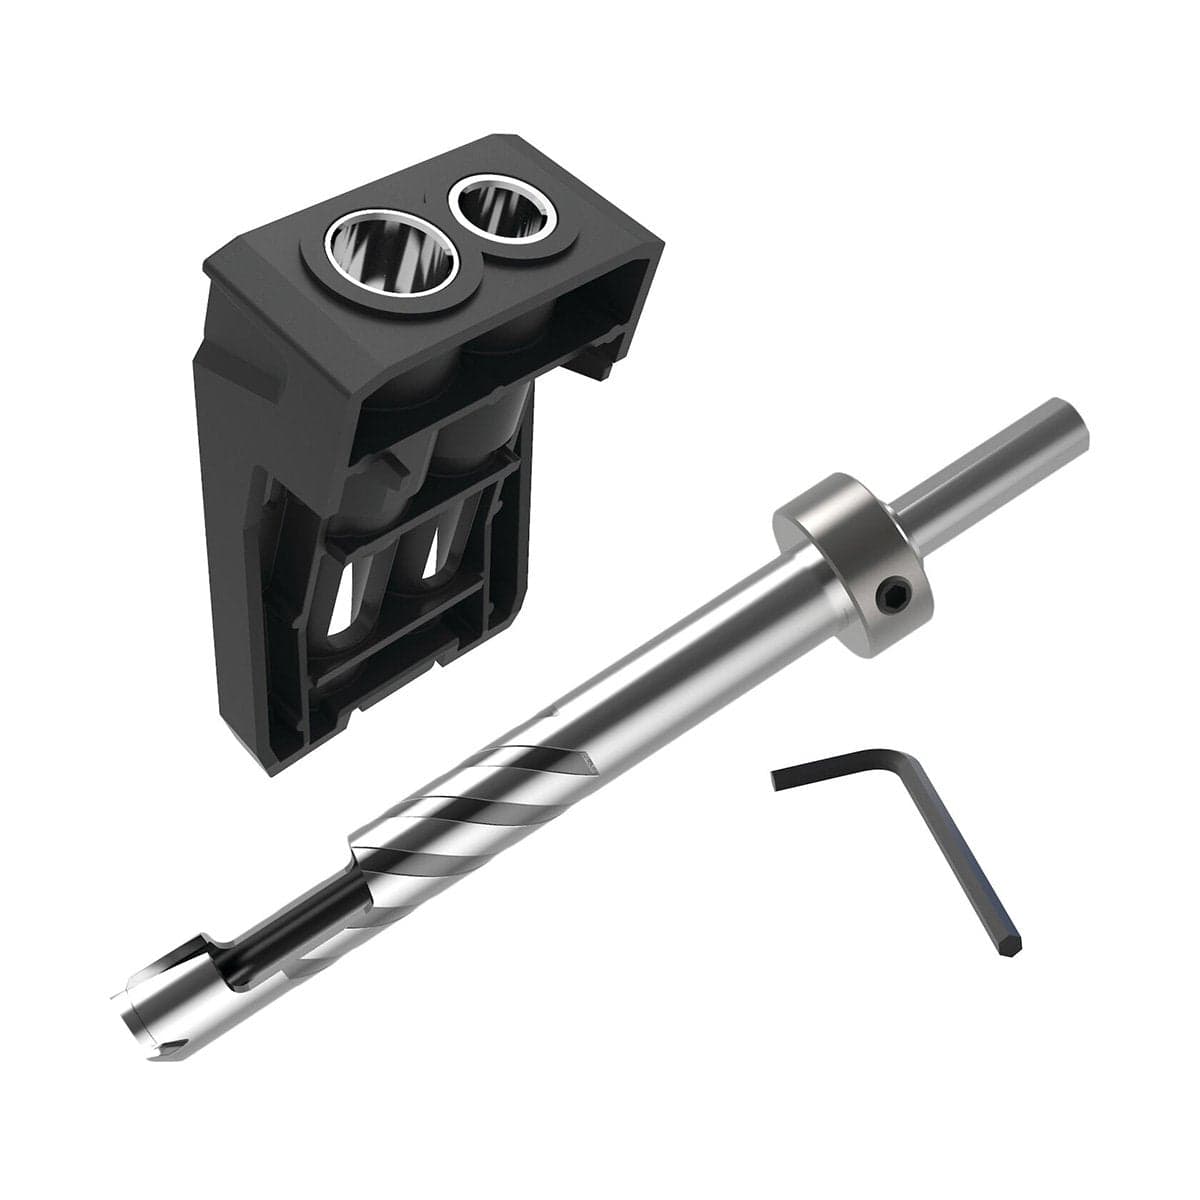 Kreg Tool KPHA740 Joinery Plug Cutter Drill Guide Kit